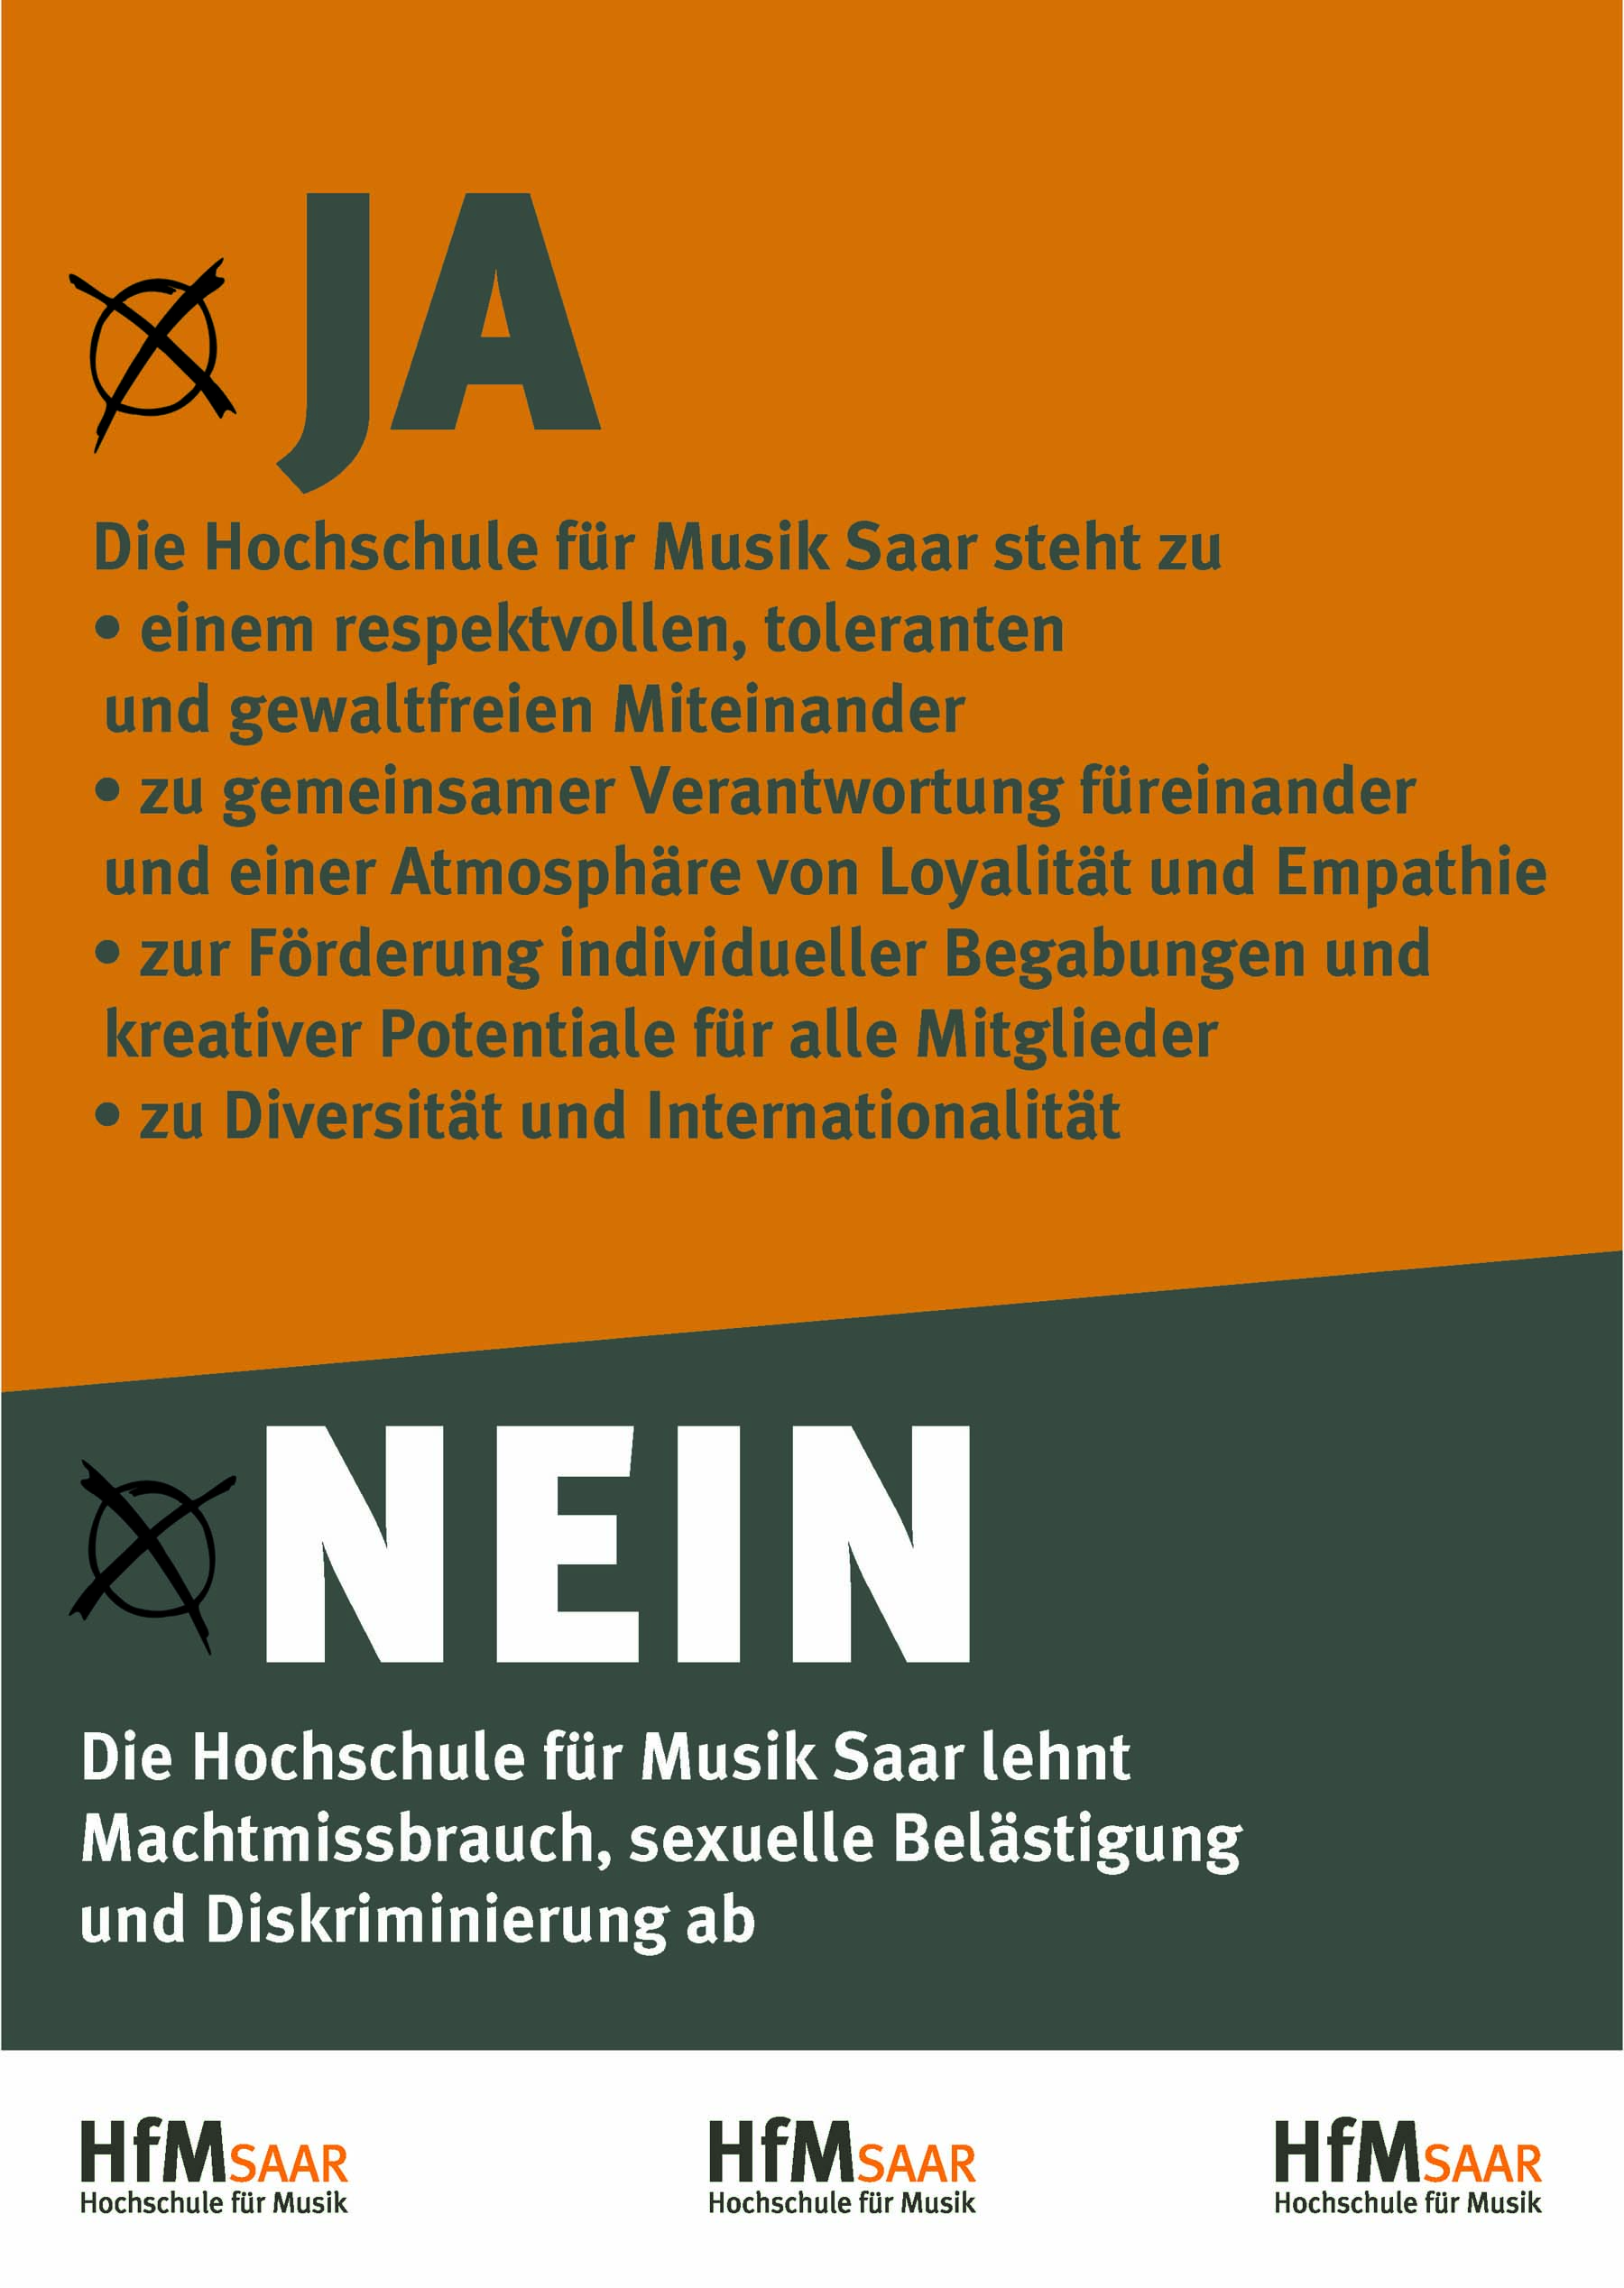 Plakat gegen Diskriminierung